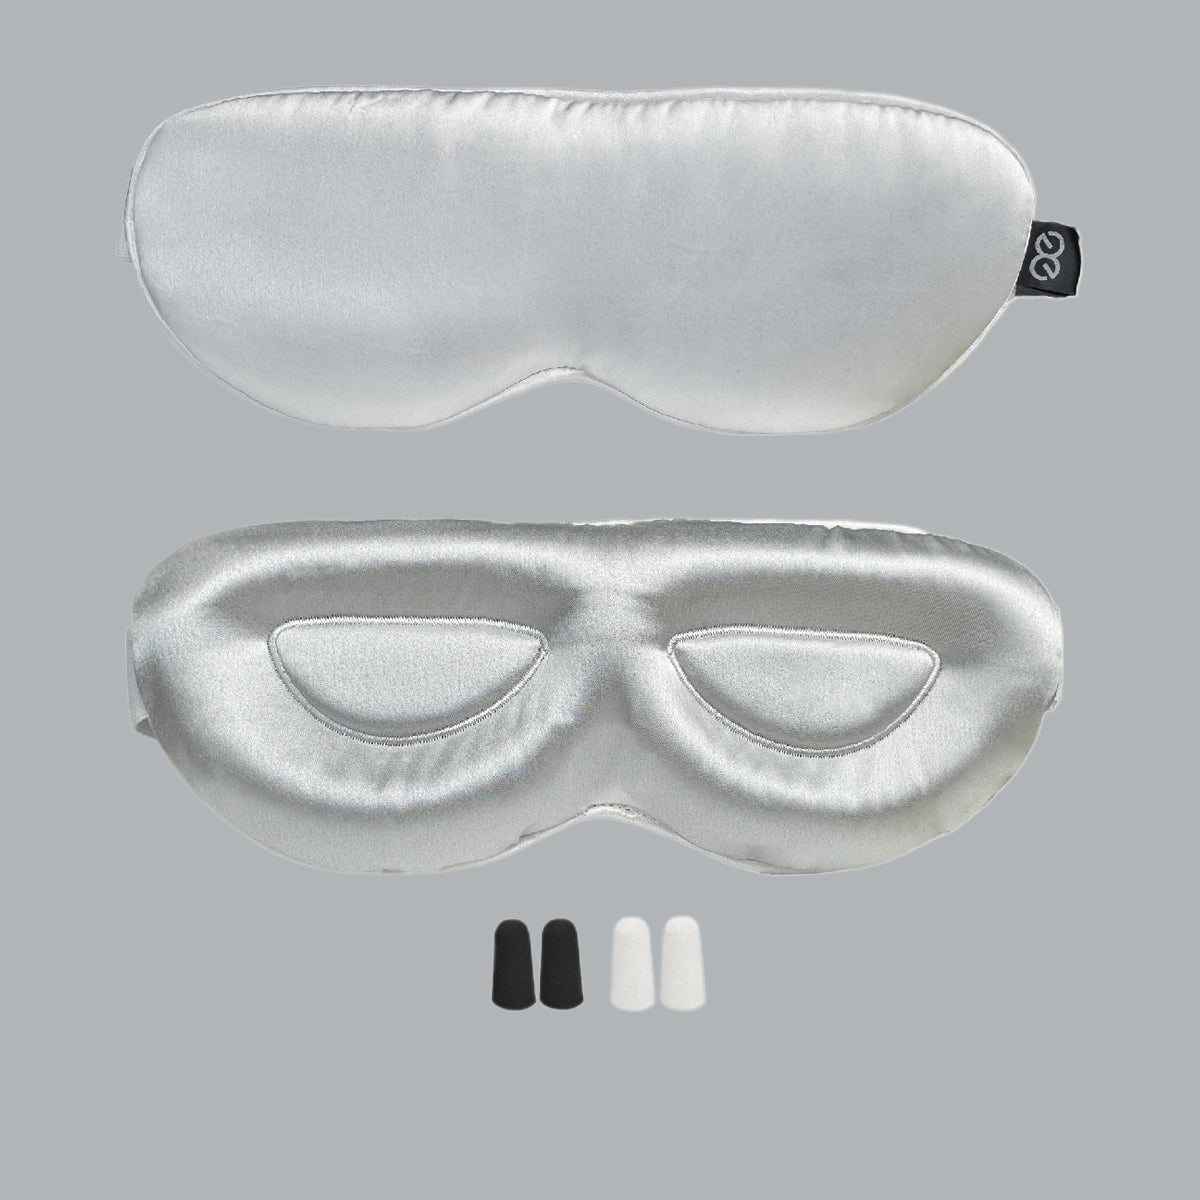 23MM Mulberry Silk 3D Eye Mask with Sleeping Earplugs